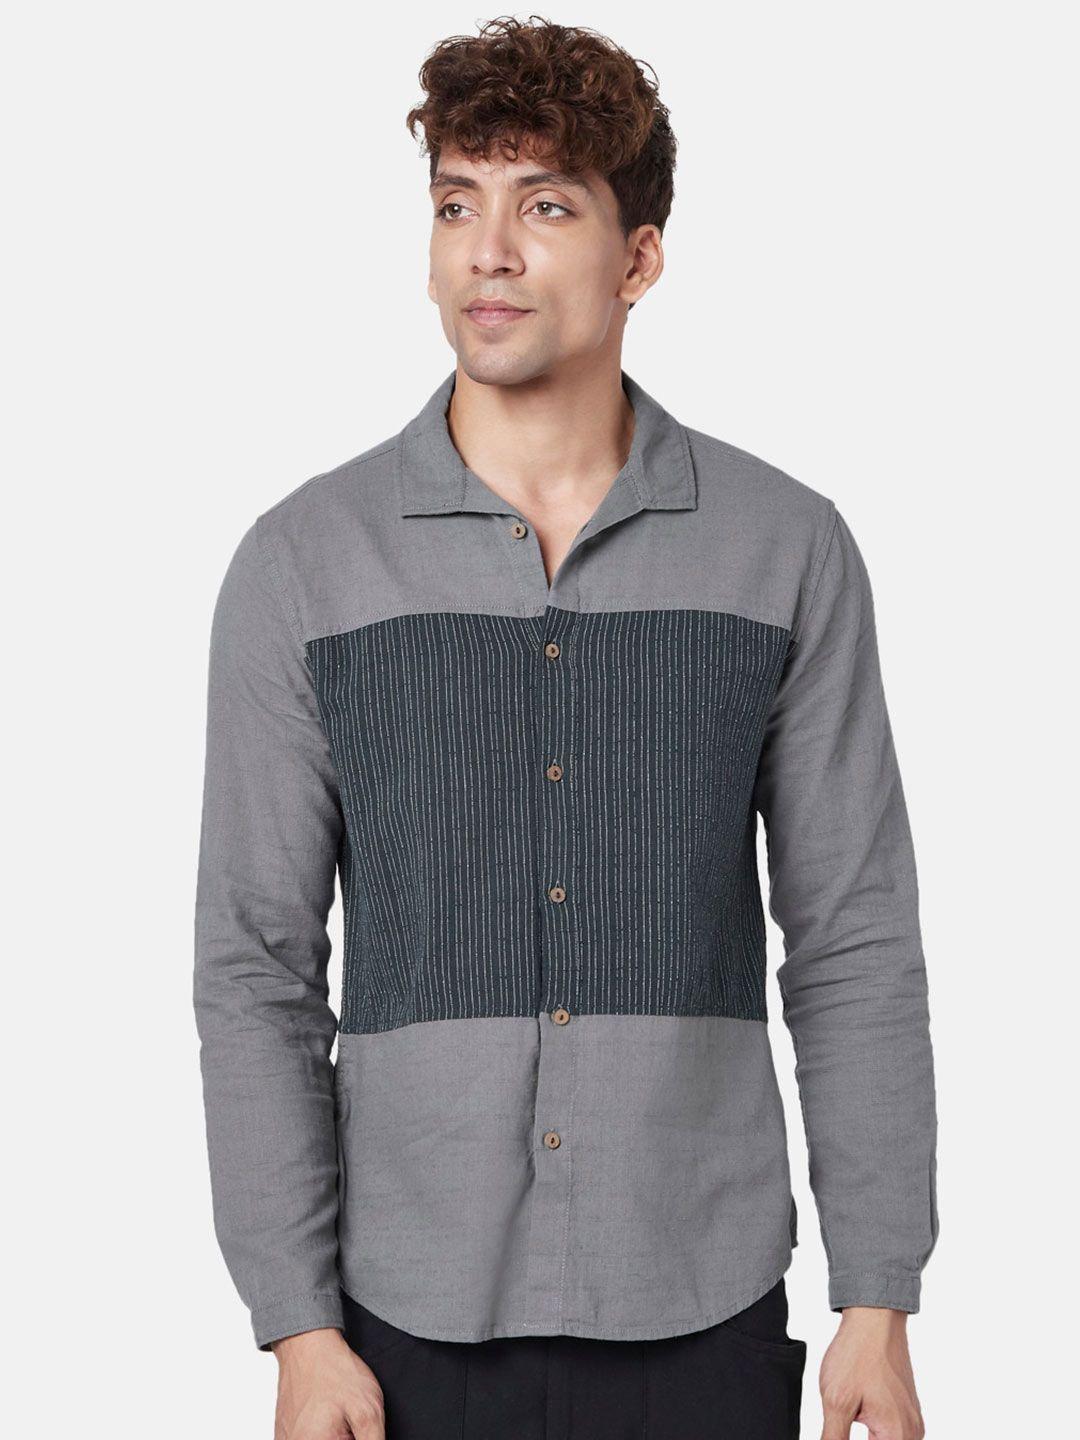 7 alt by pantaloons colourblocked cotton casual shirt